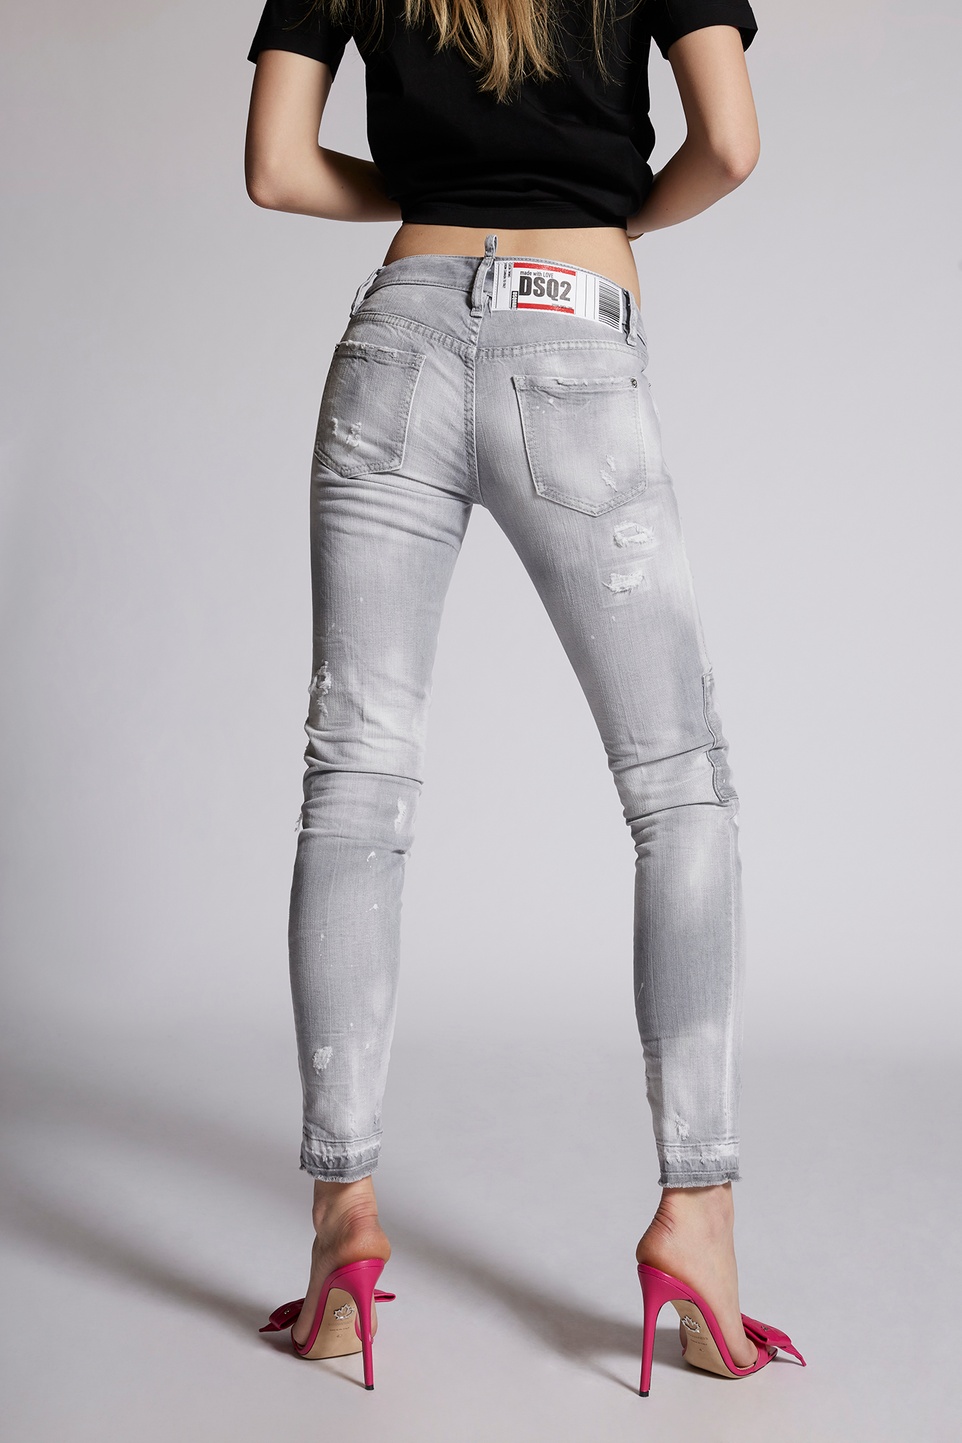 Dsquared Jeans Jennifer Light Grey Washed  44 IT / 38 DE